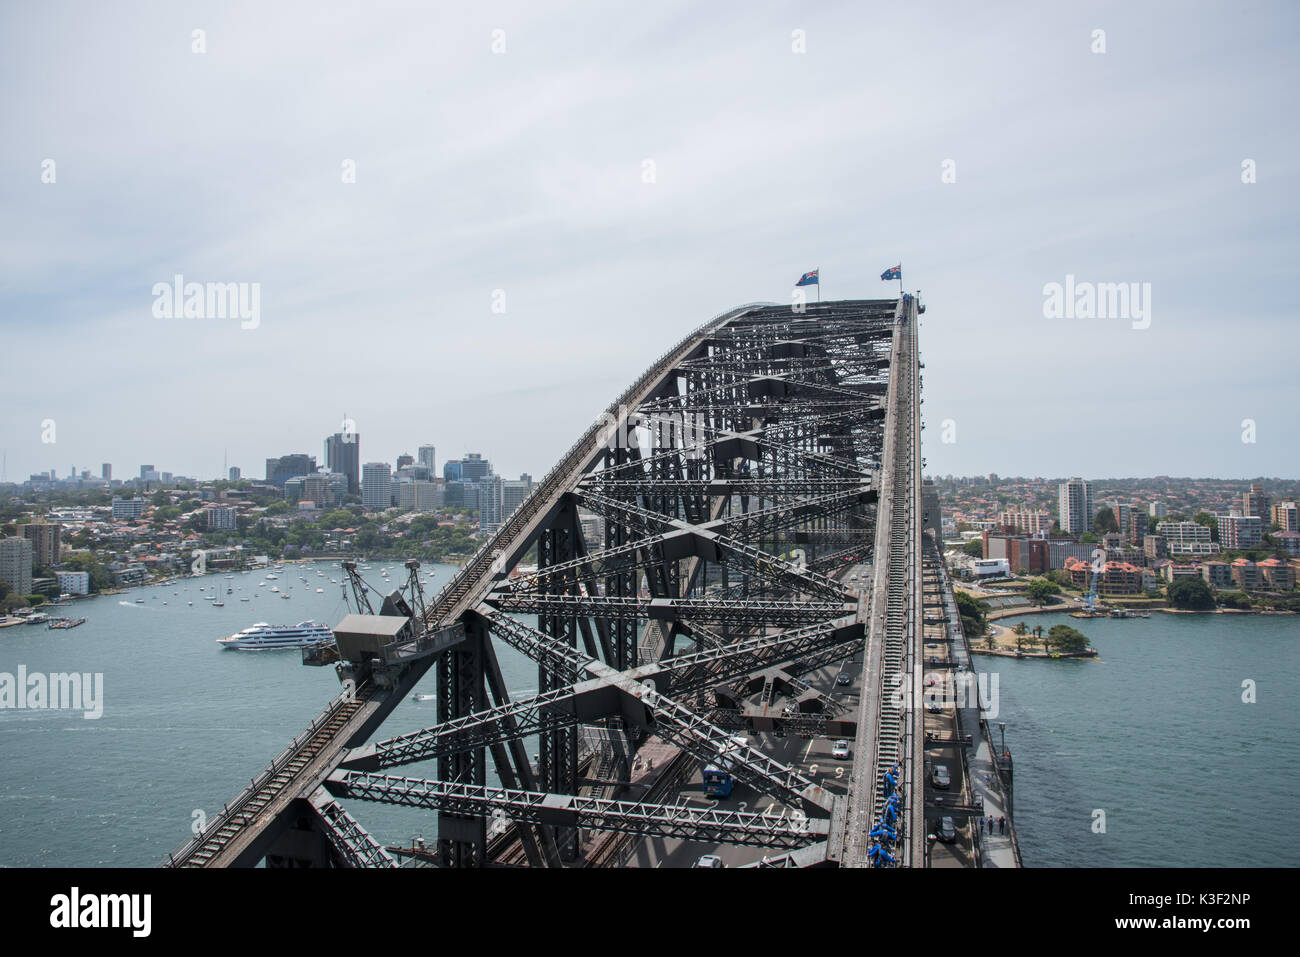 SYDNEY,NSW,AUSTRALIA-NOVEMBER 20,2016: Cruise boat, waterfront architecture and climbers on Sydney Harbour Bridge in Sydney, Australia. Stock Photo